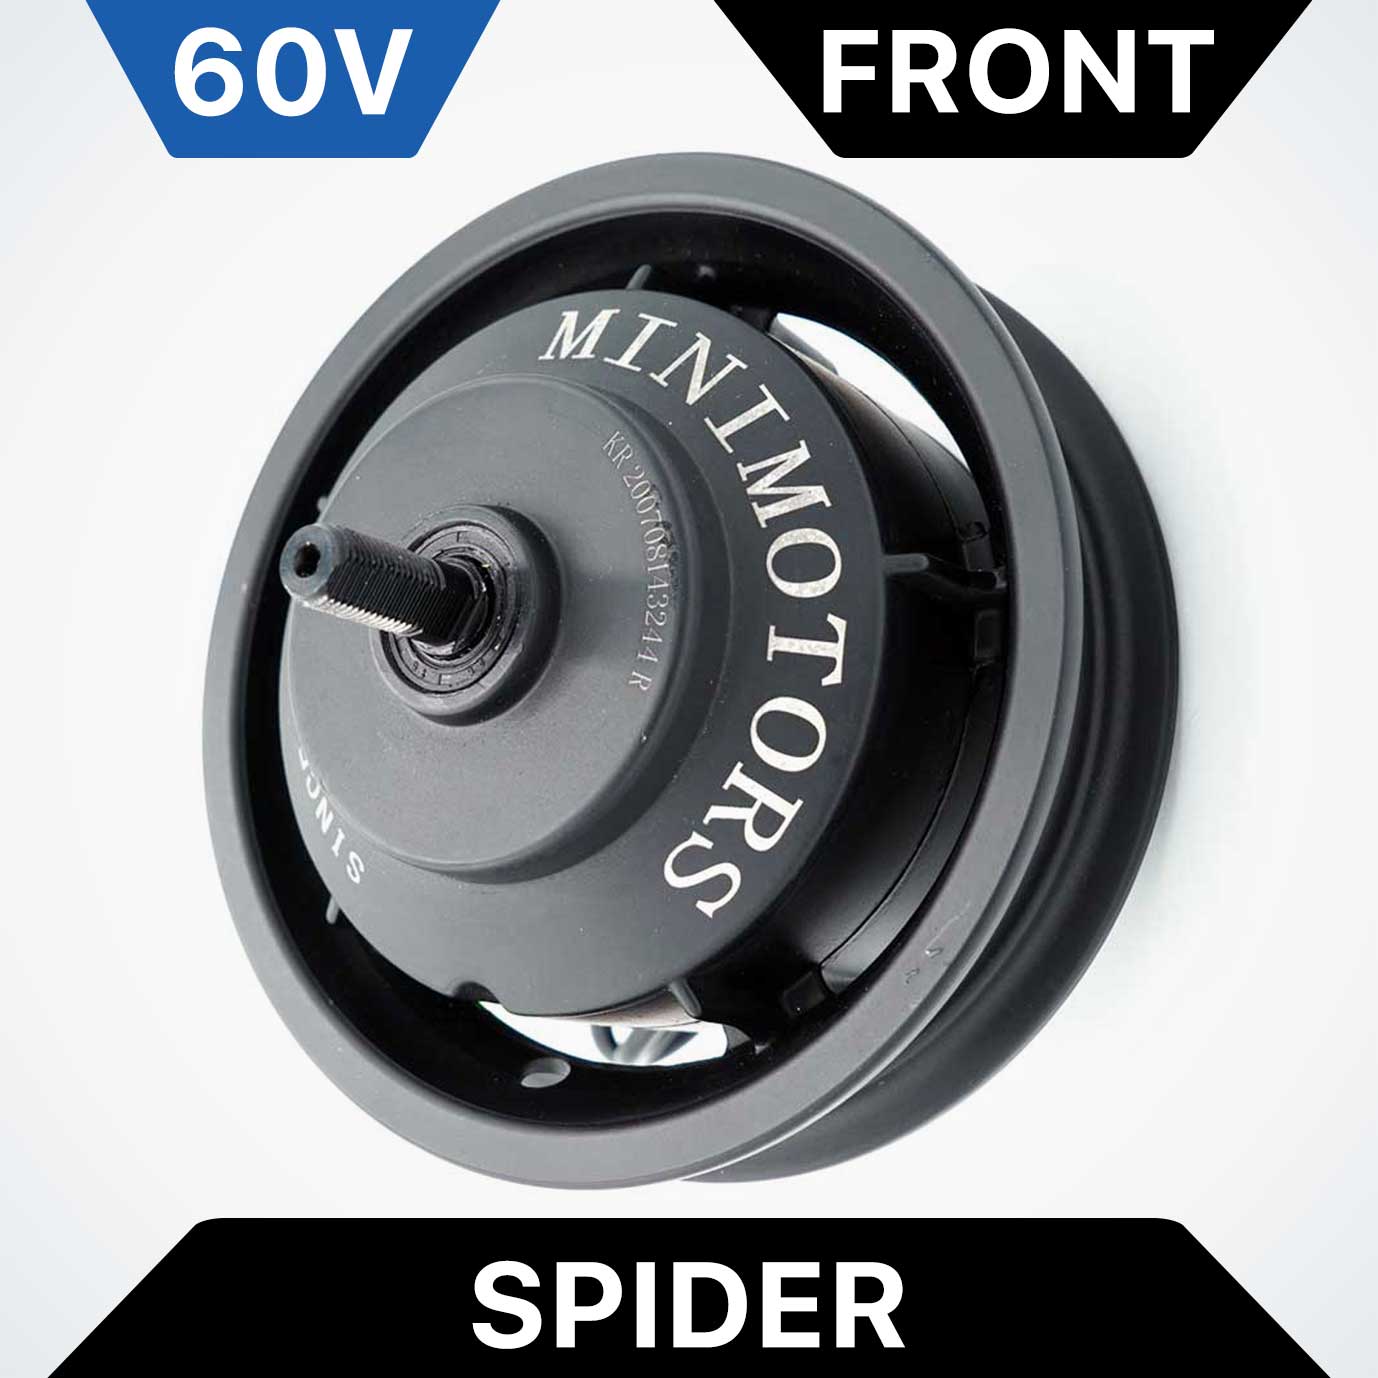 Front Motor for Dualtron Spider - 60V